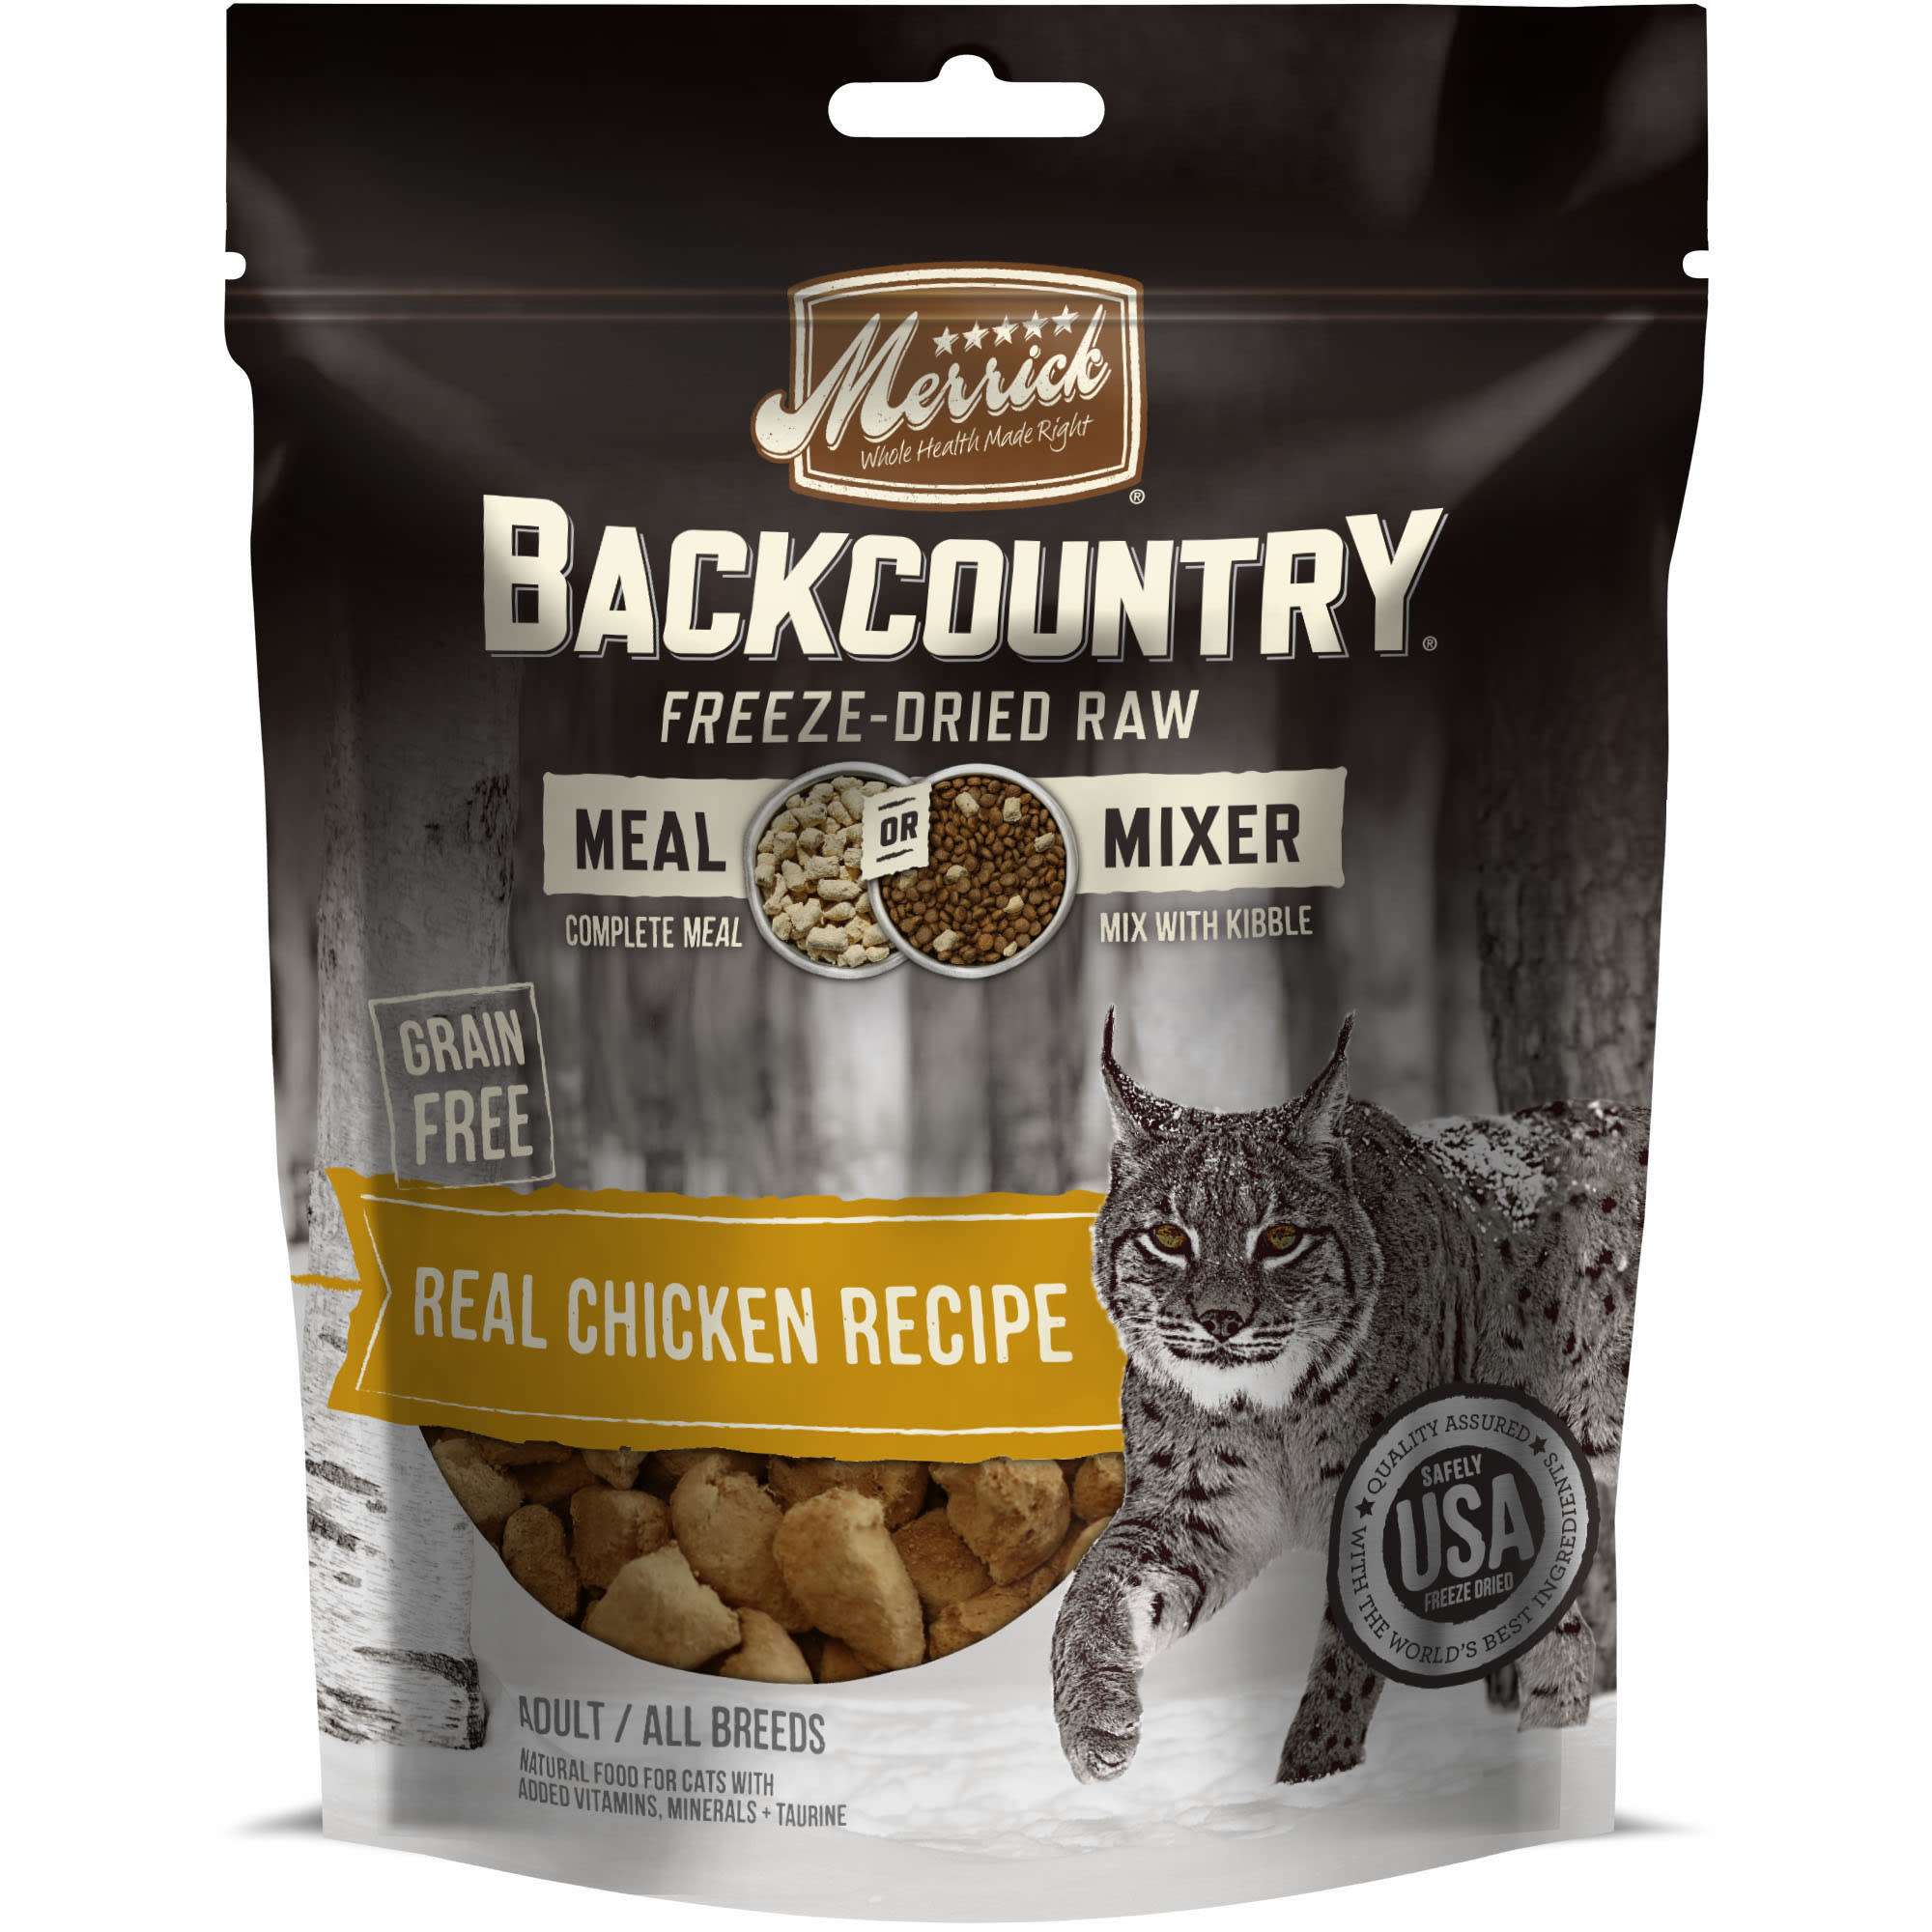 Merrick Backcountry Cat Food Recall